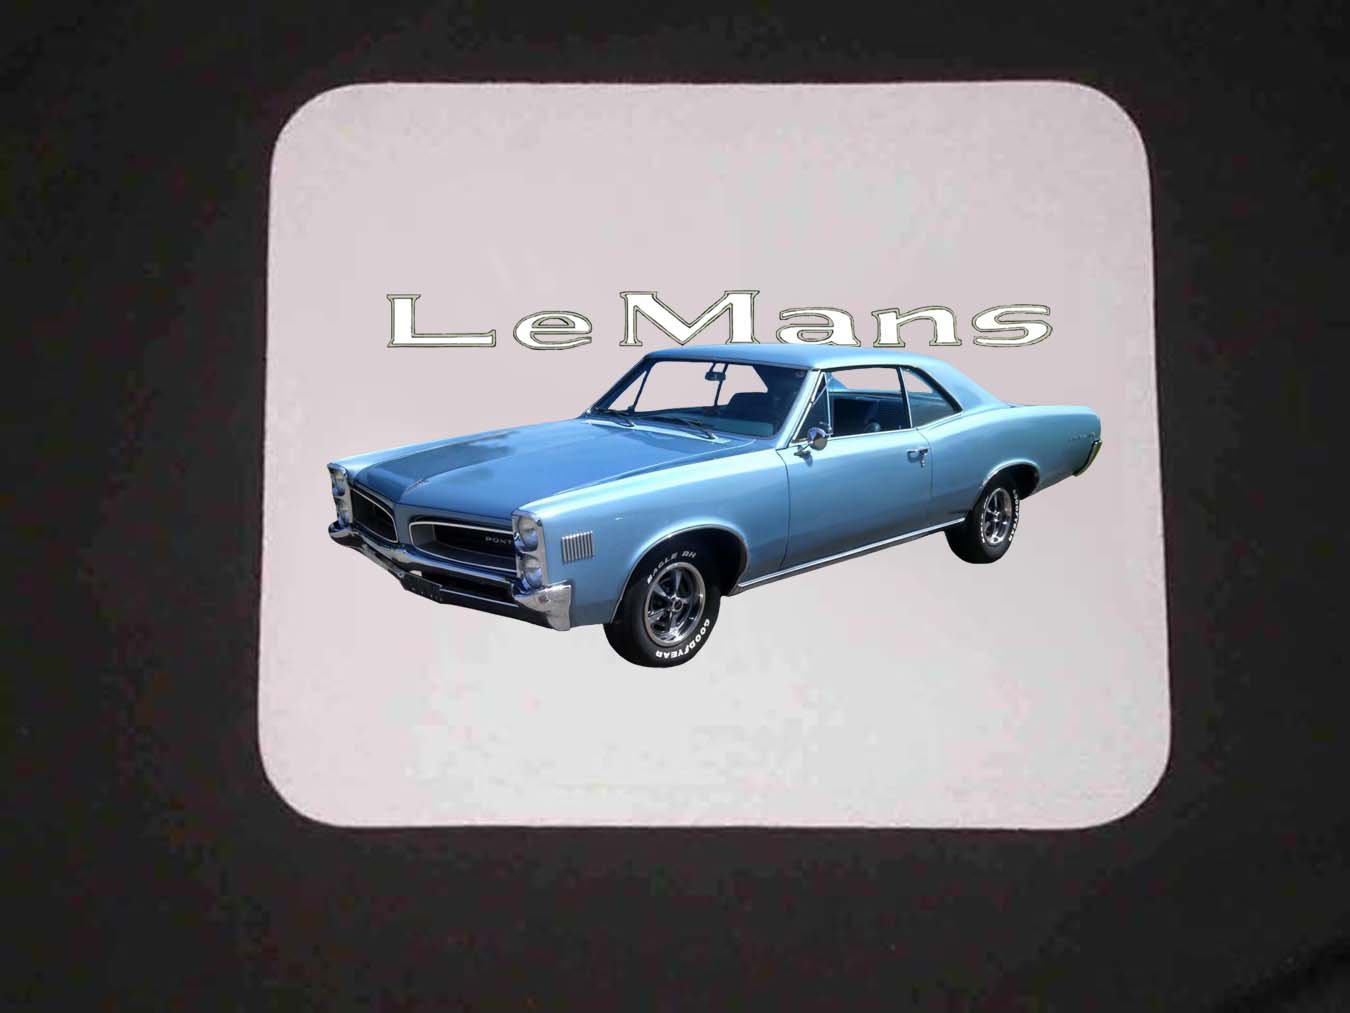 New 1966 Pontiac Lemans Mousepad!